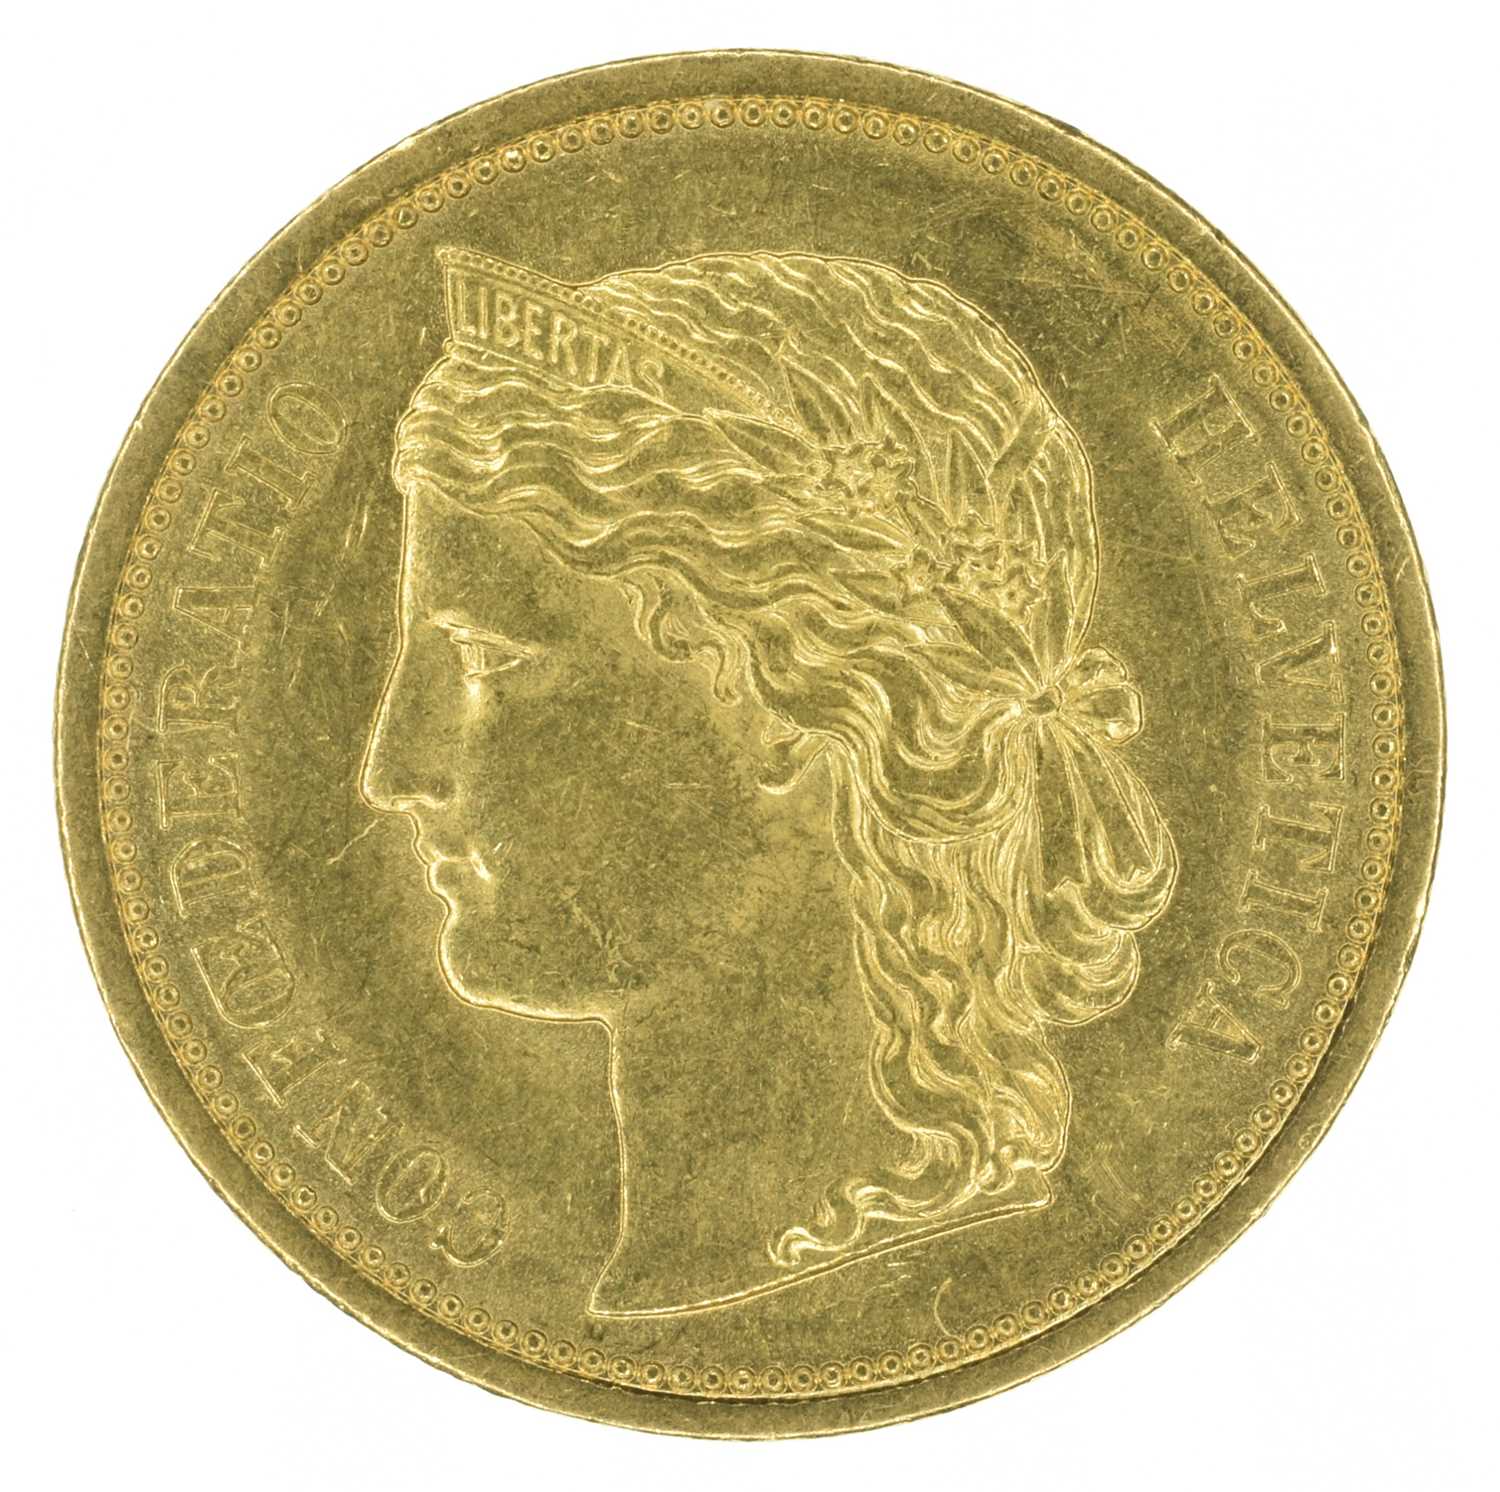 Lot 96 - Switzerland, 20 Francs, gold, EF.